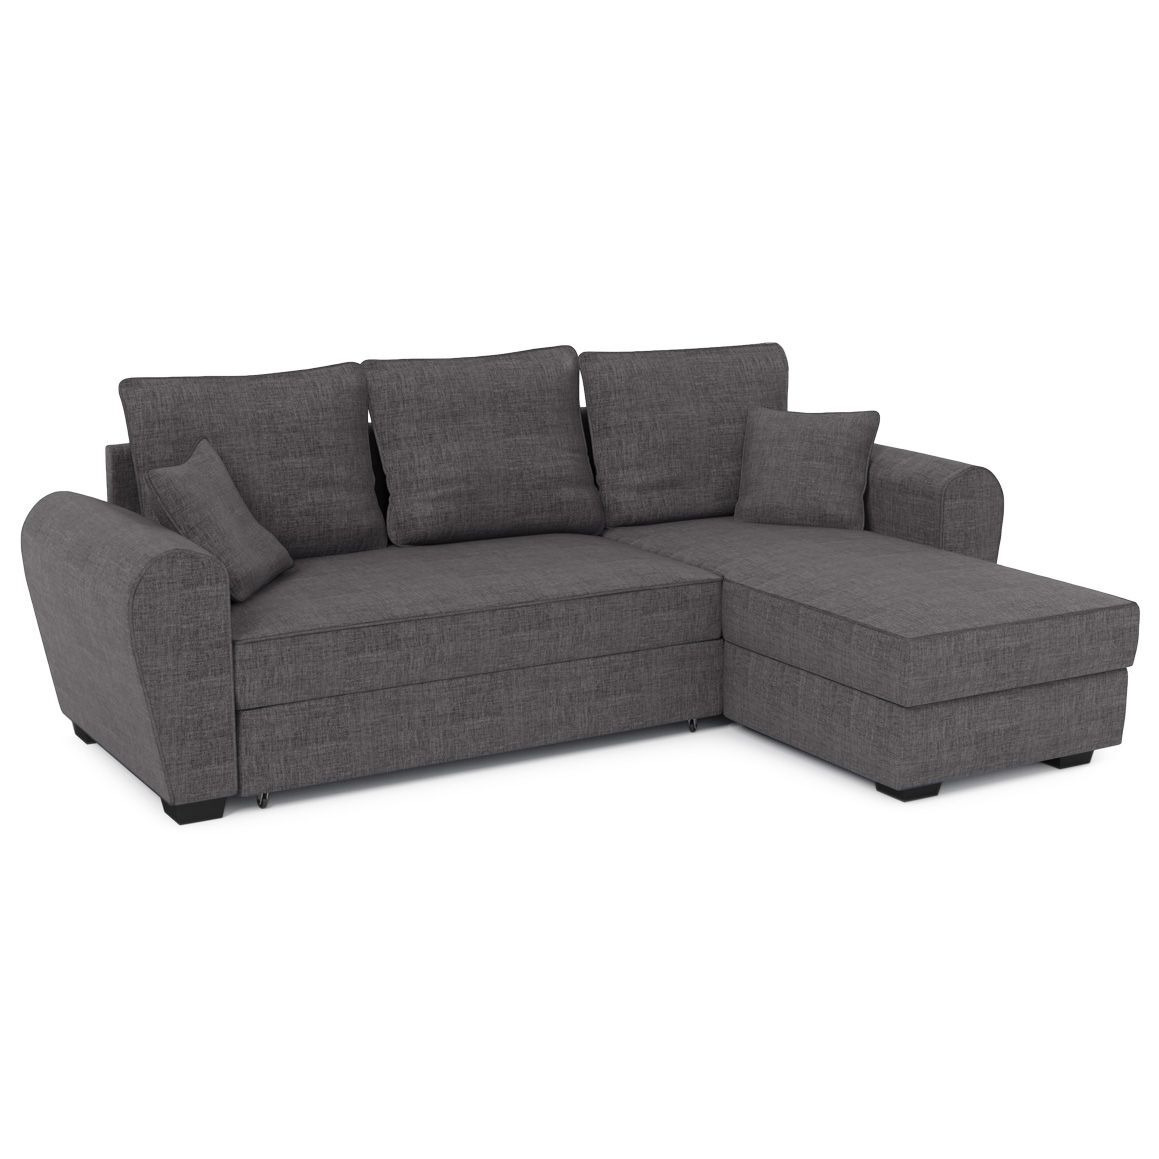 Nicea Corner Sofa Bed With Storage, dark grey - image 1